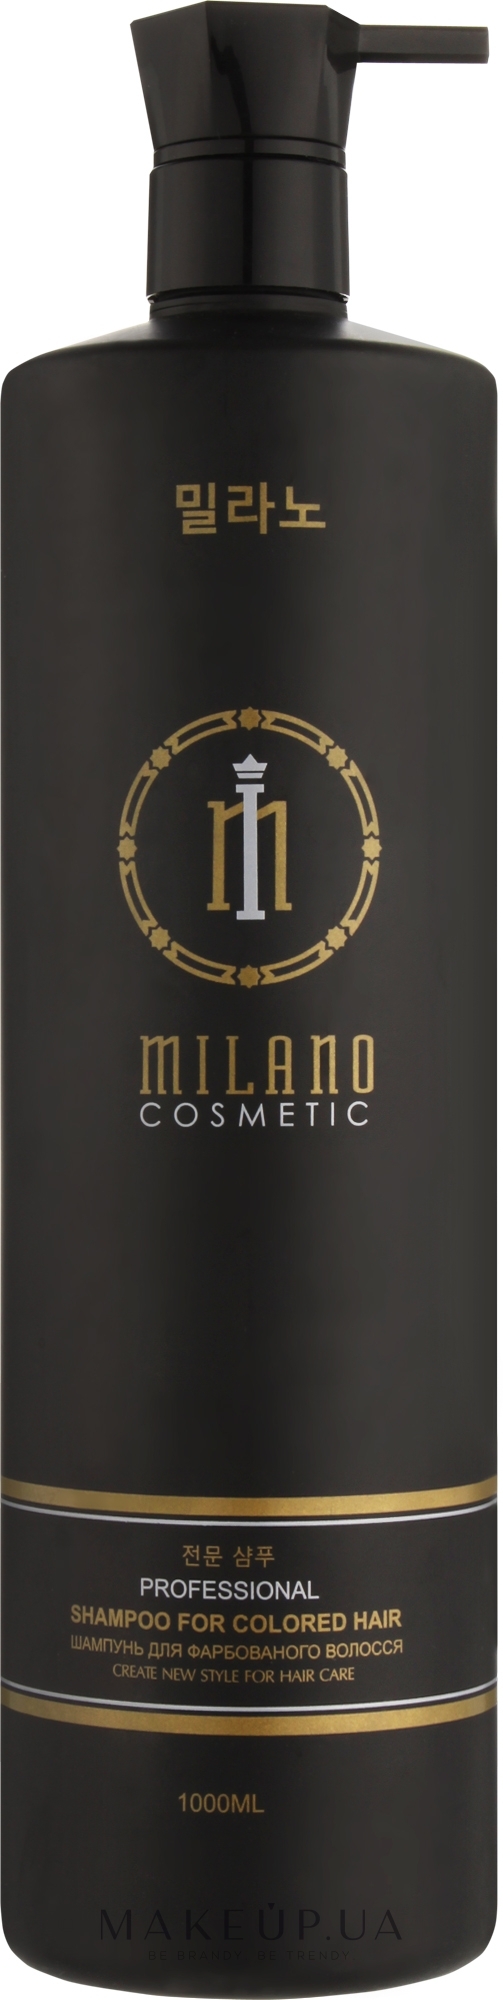 Шампунь для окрашенных волос - Milano Cosmetic Professional Shampoo For Colored Hair — фото 1000ml